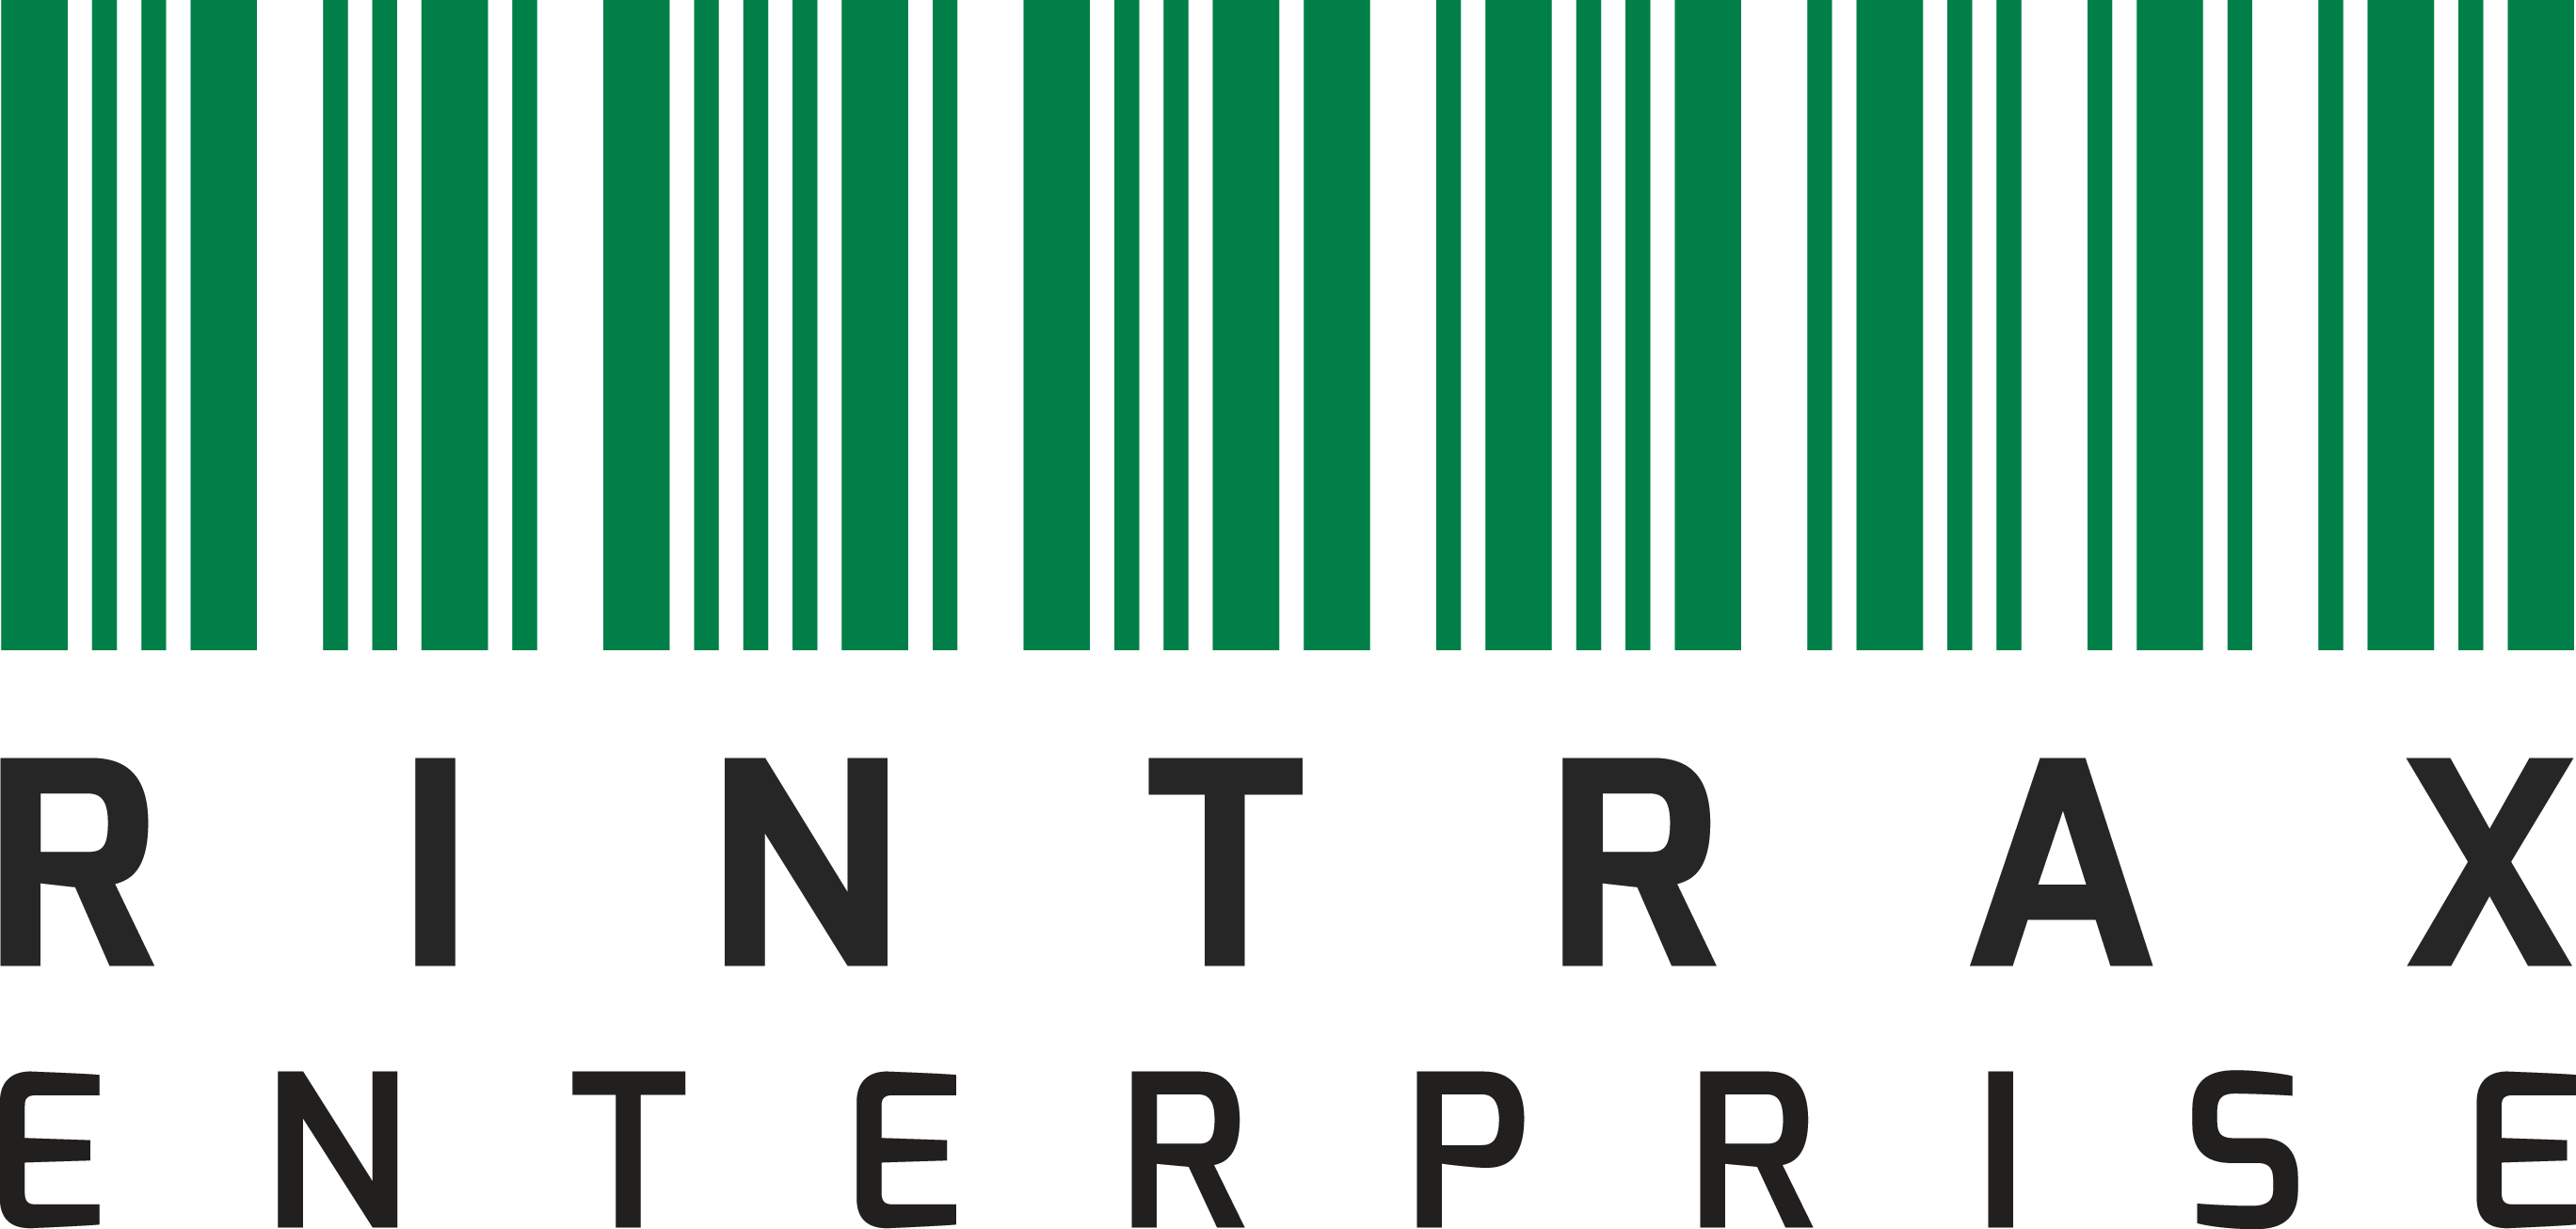 Rintrax Enterprise